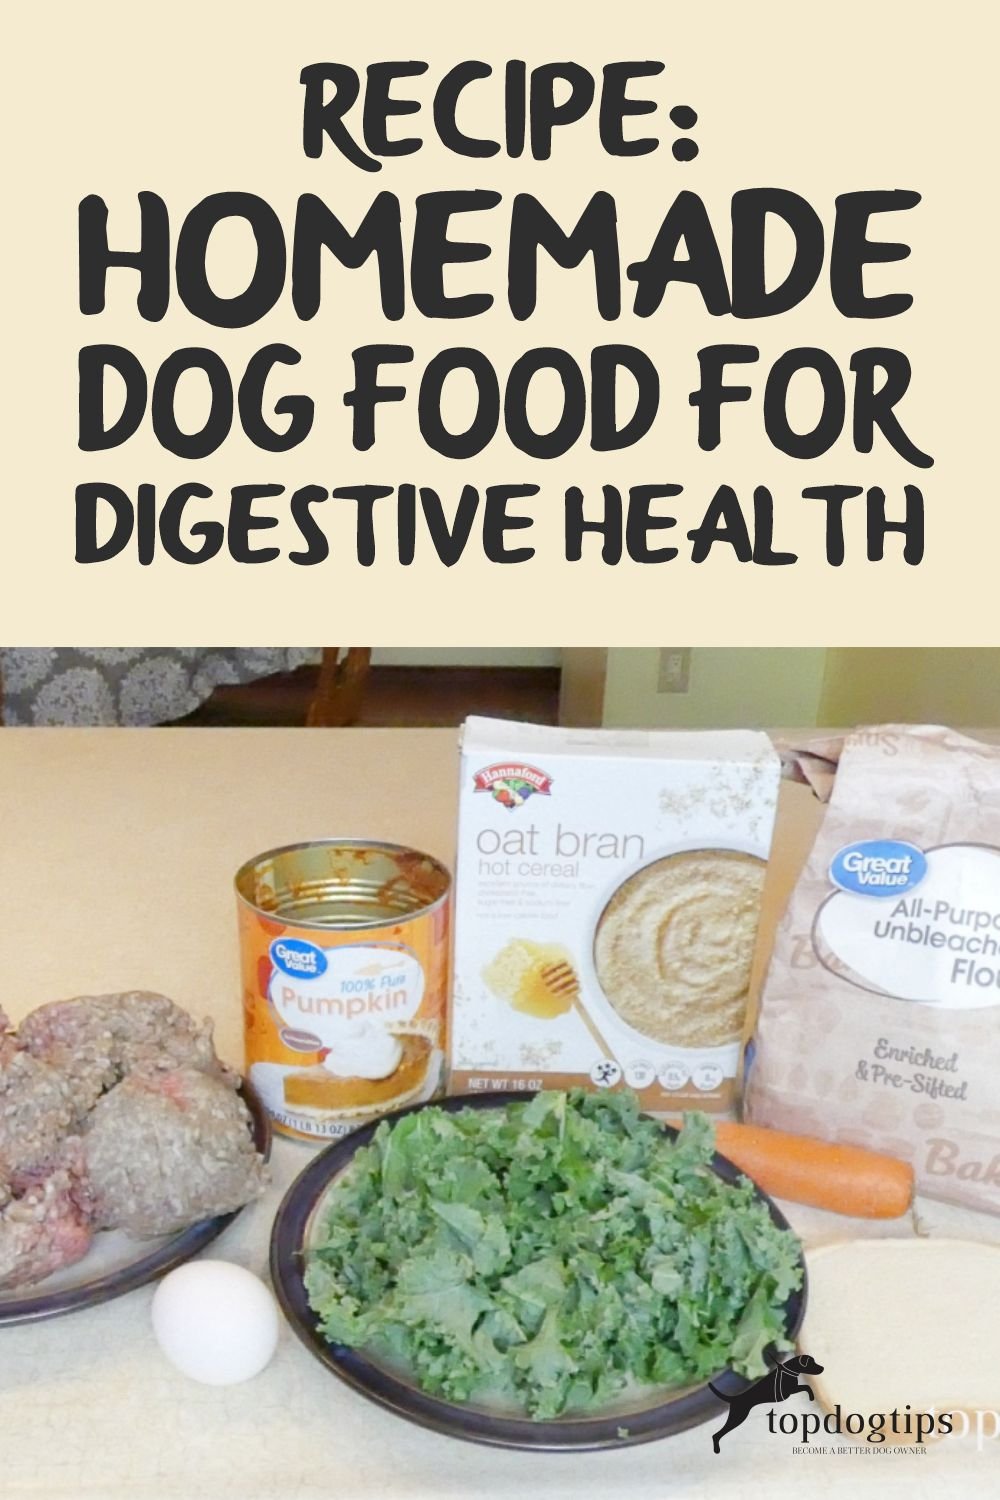  Dog Food for Digestive Health